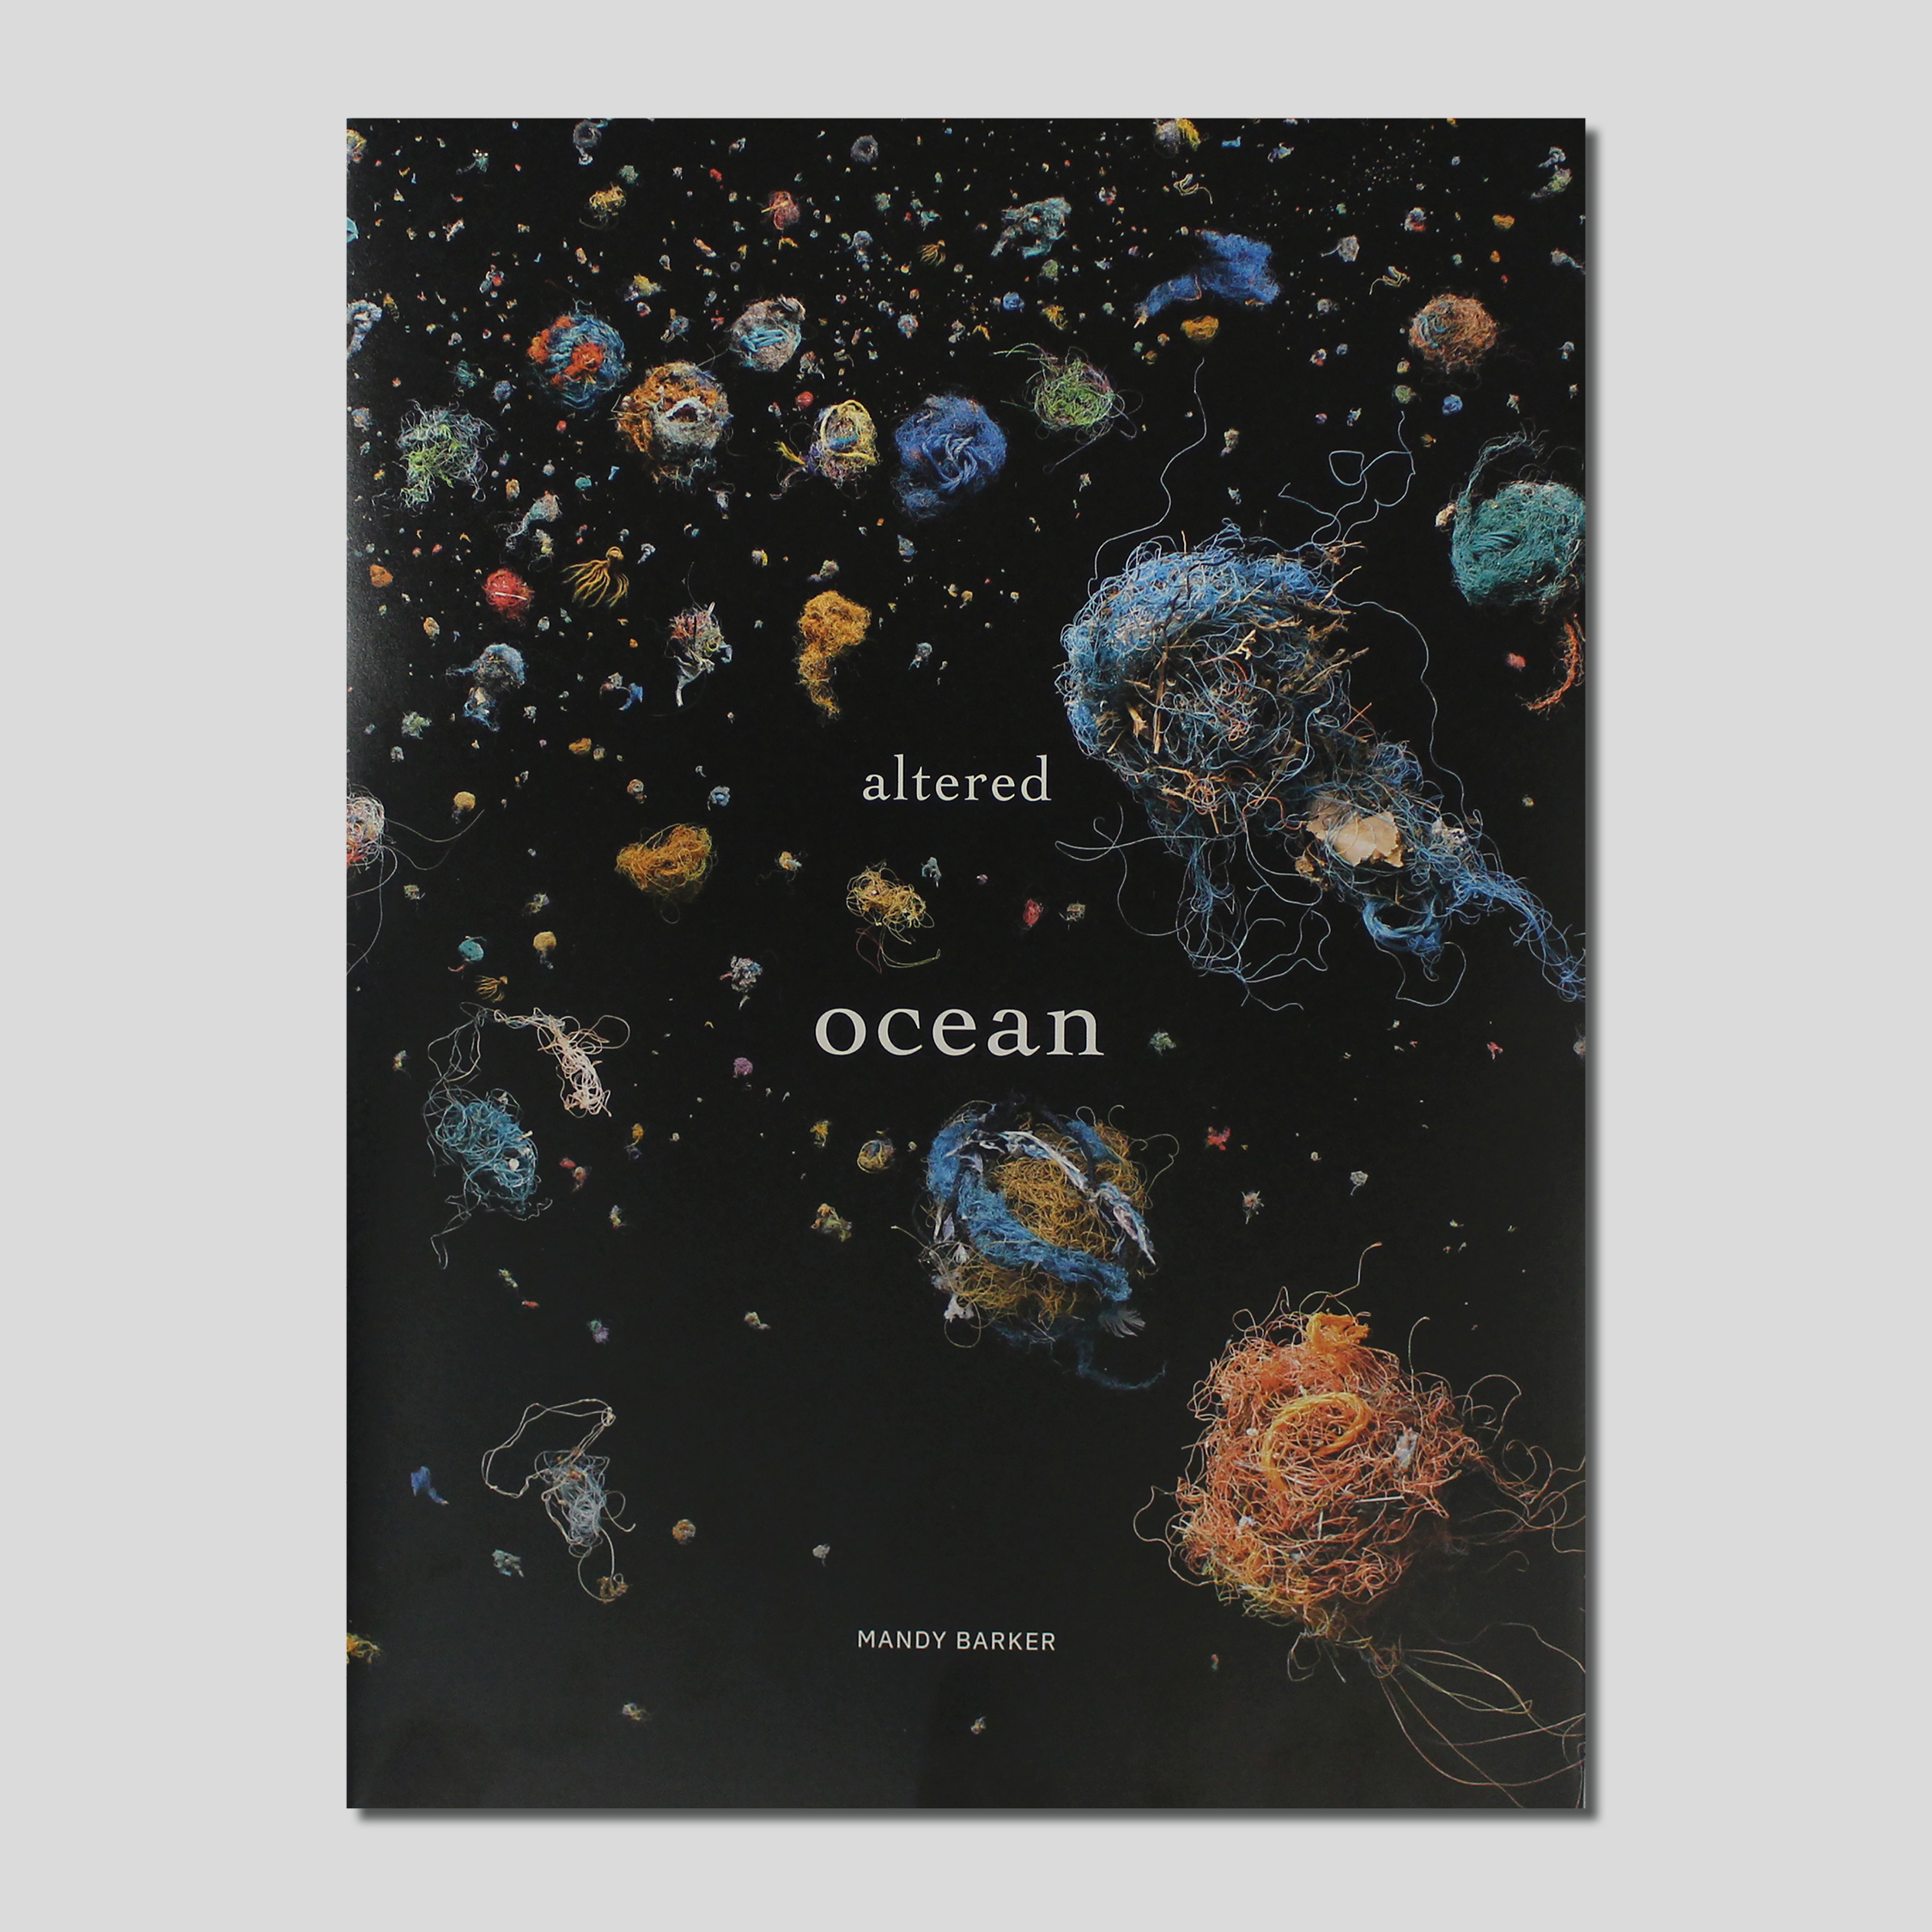 Altered Ocean by Mandy Barker